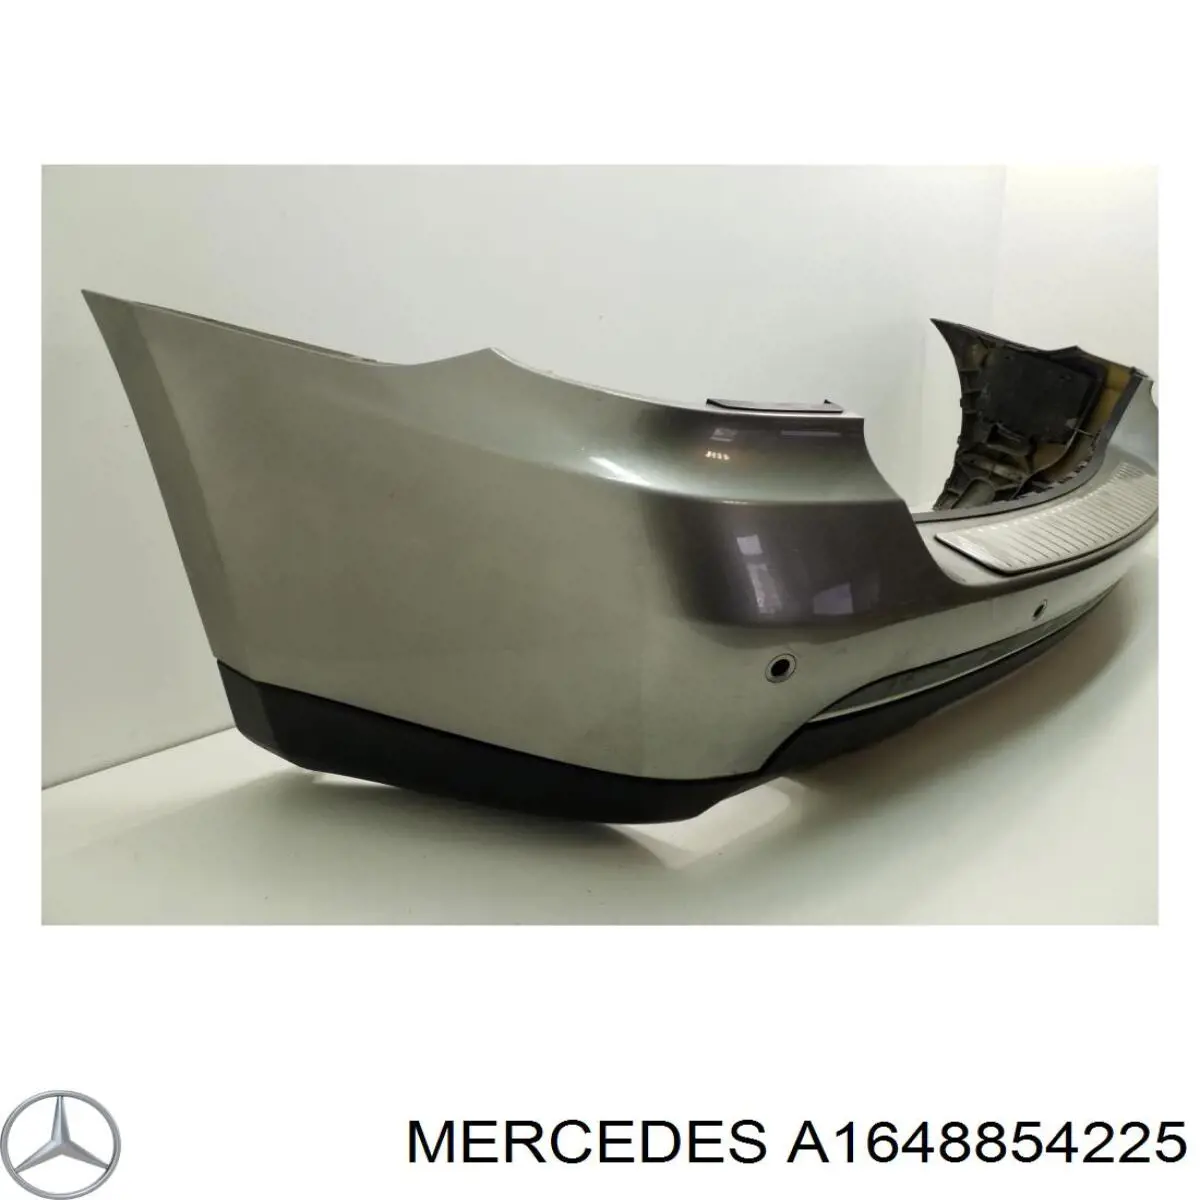 A1648854225 Mercedes parachoques trasero